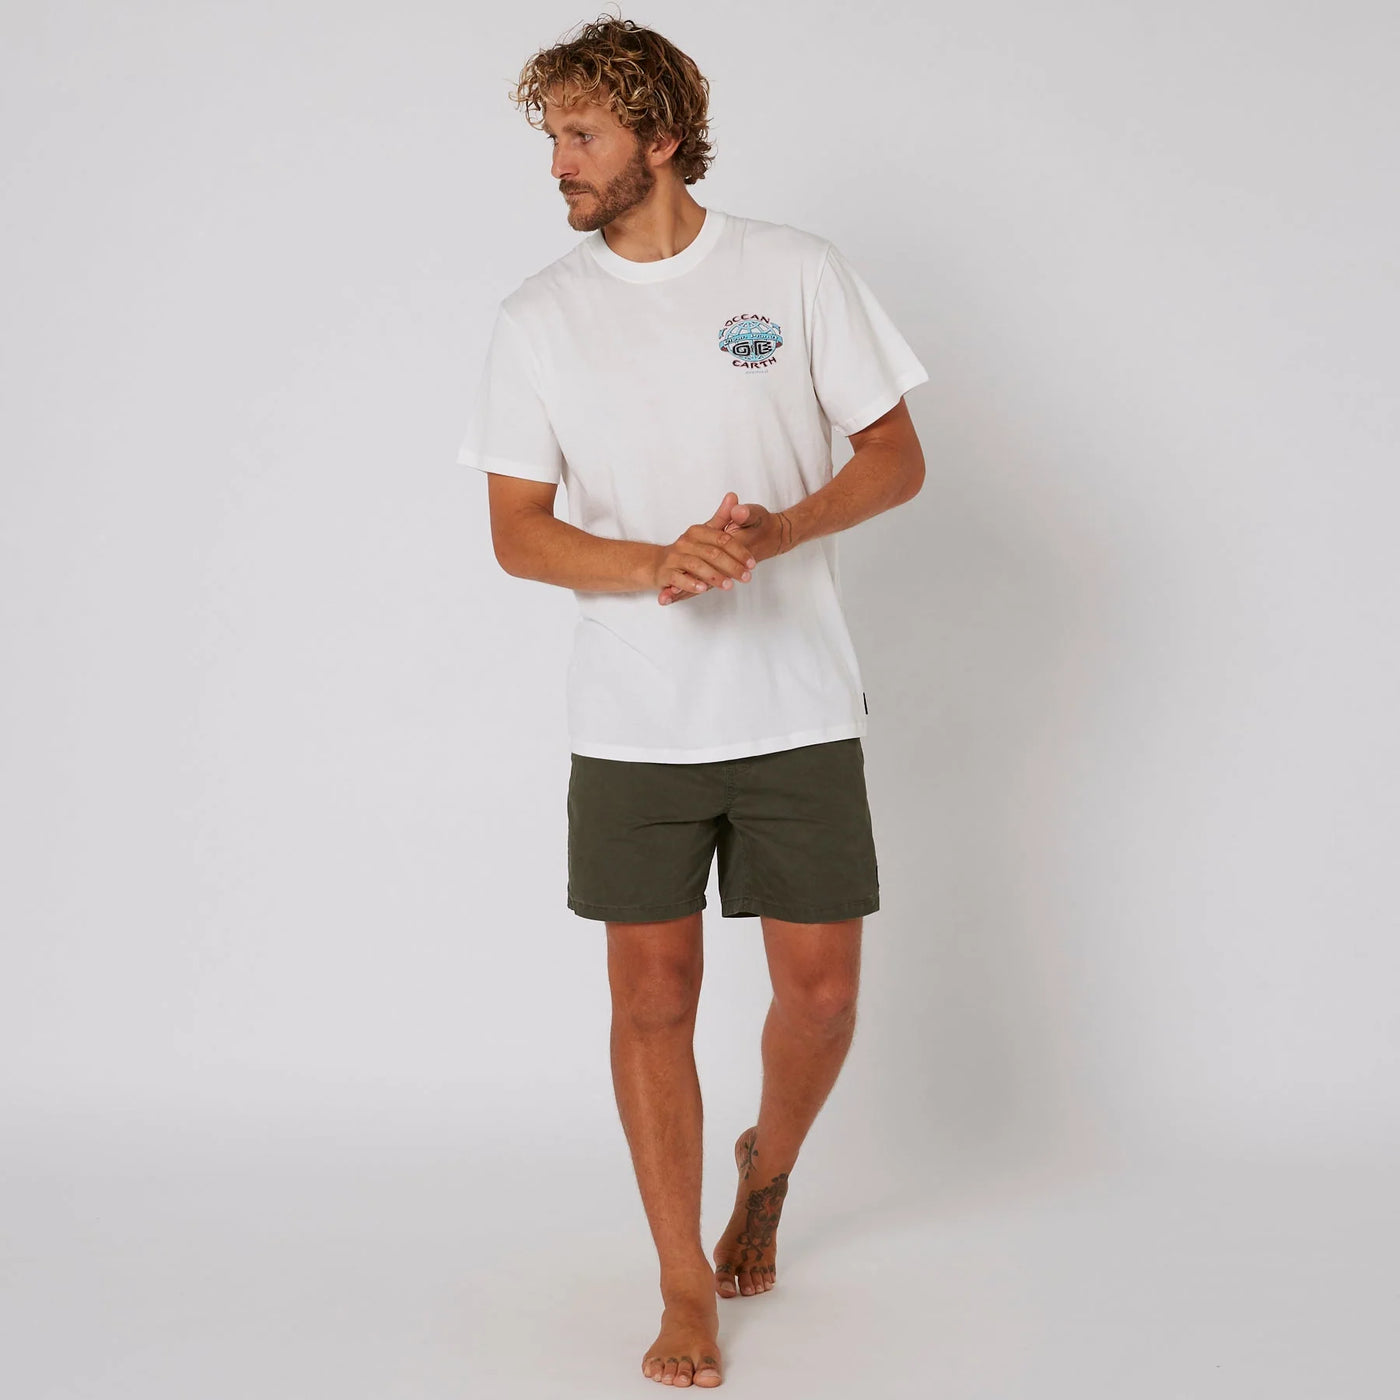 Ocean & Earth Clean Planet Camiseta Hombre